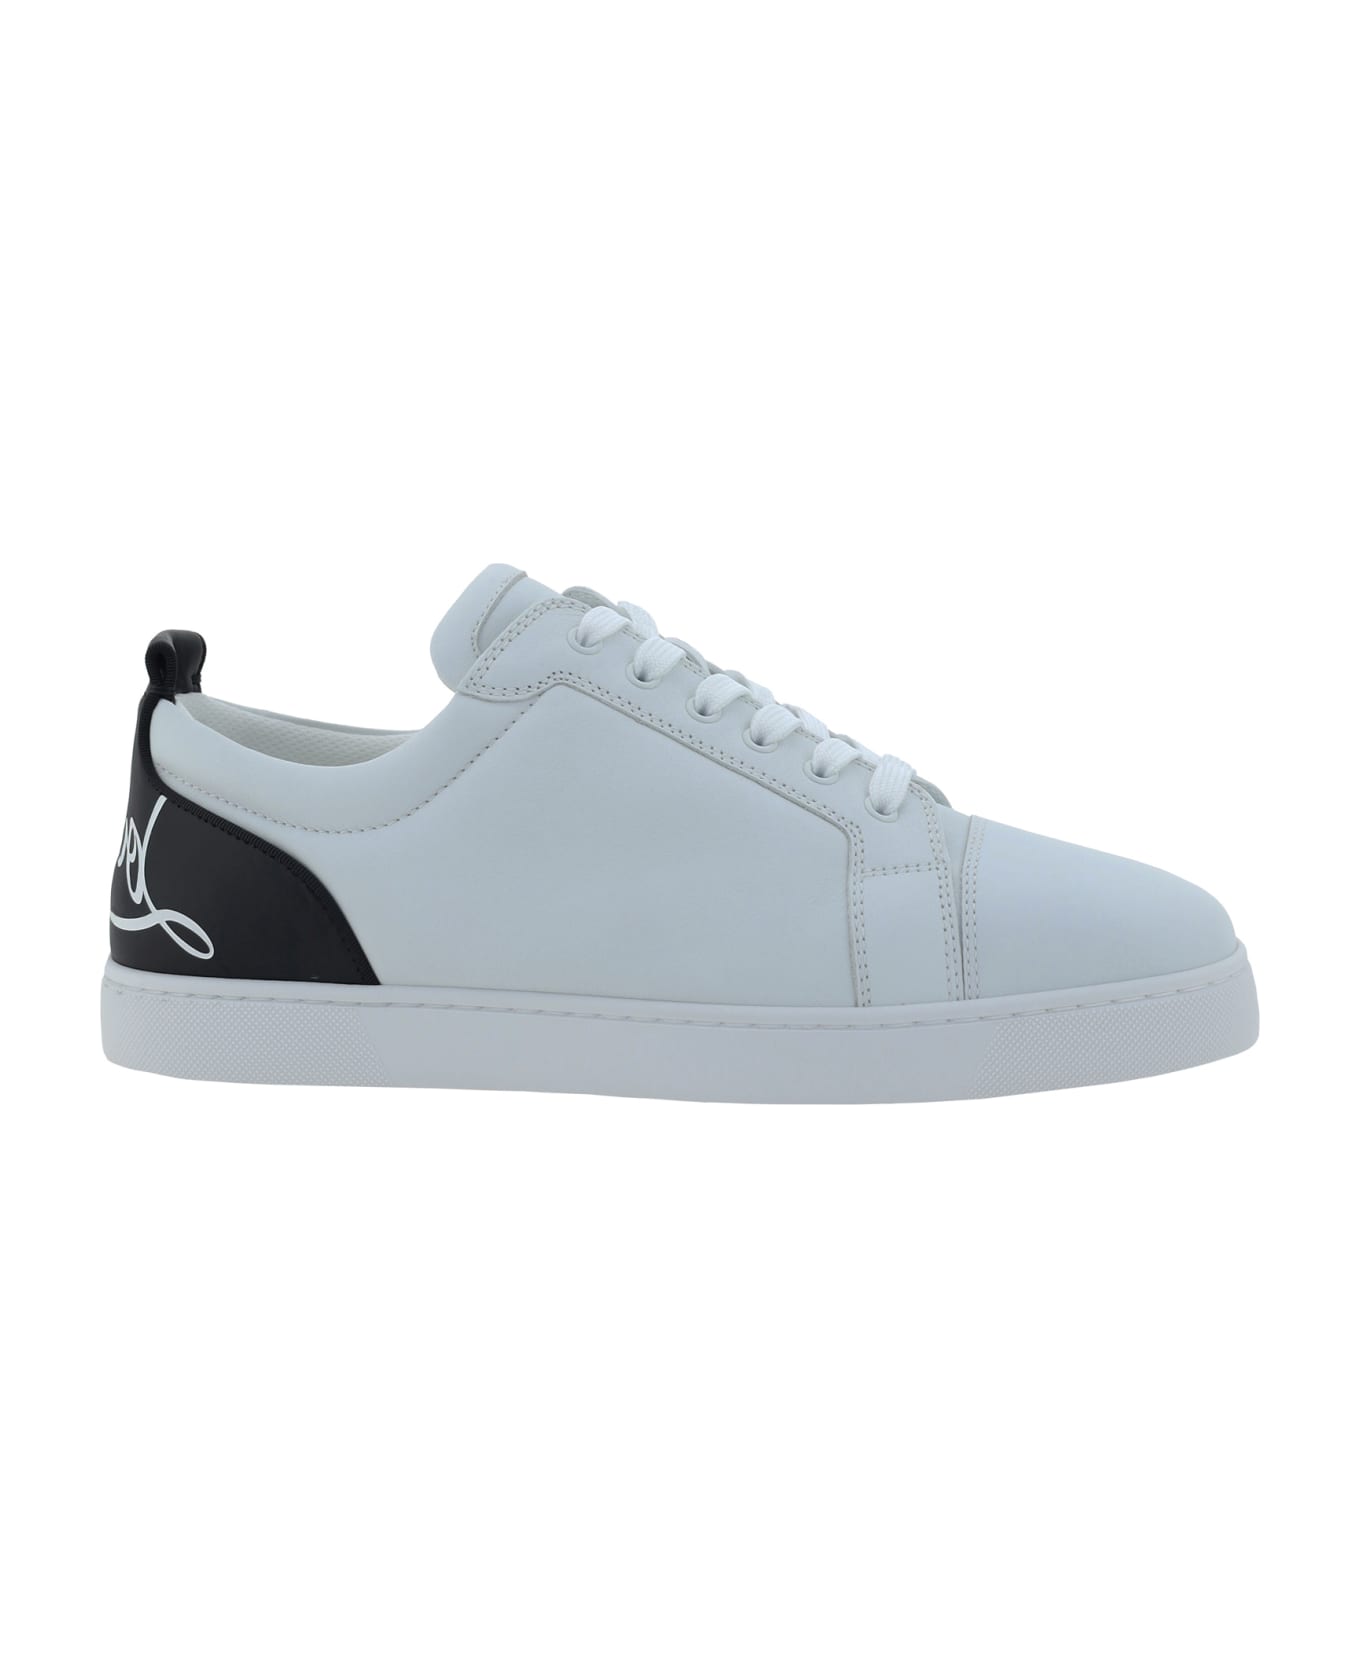 Christian Louboutin Fun Louis Junior Sneakers - White/black スニーカー